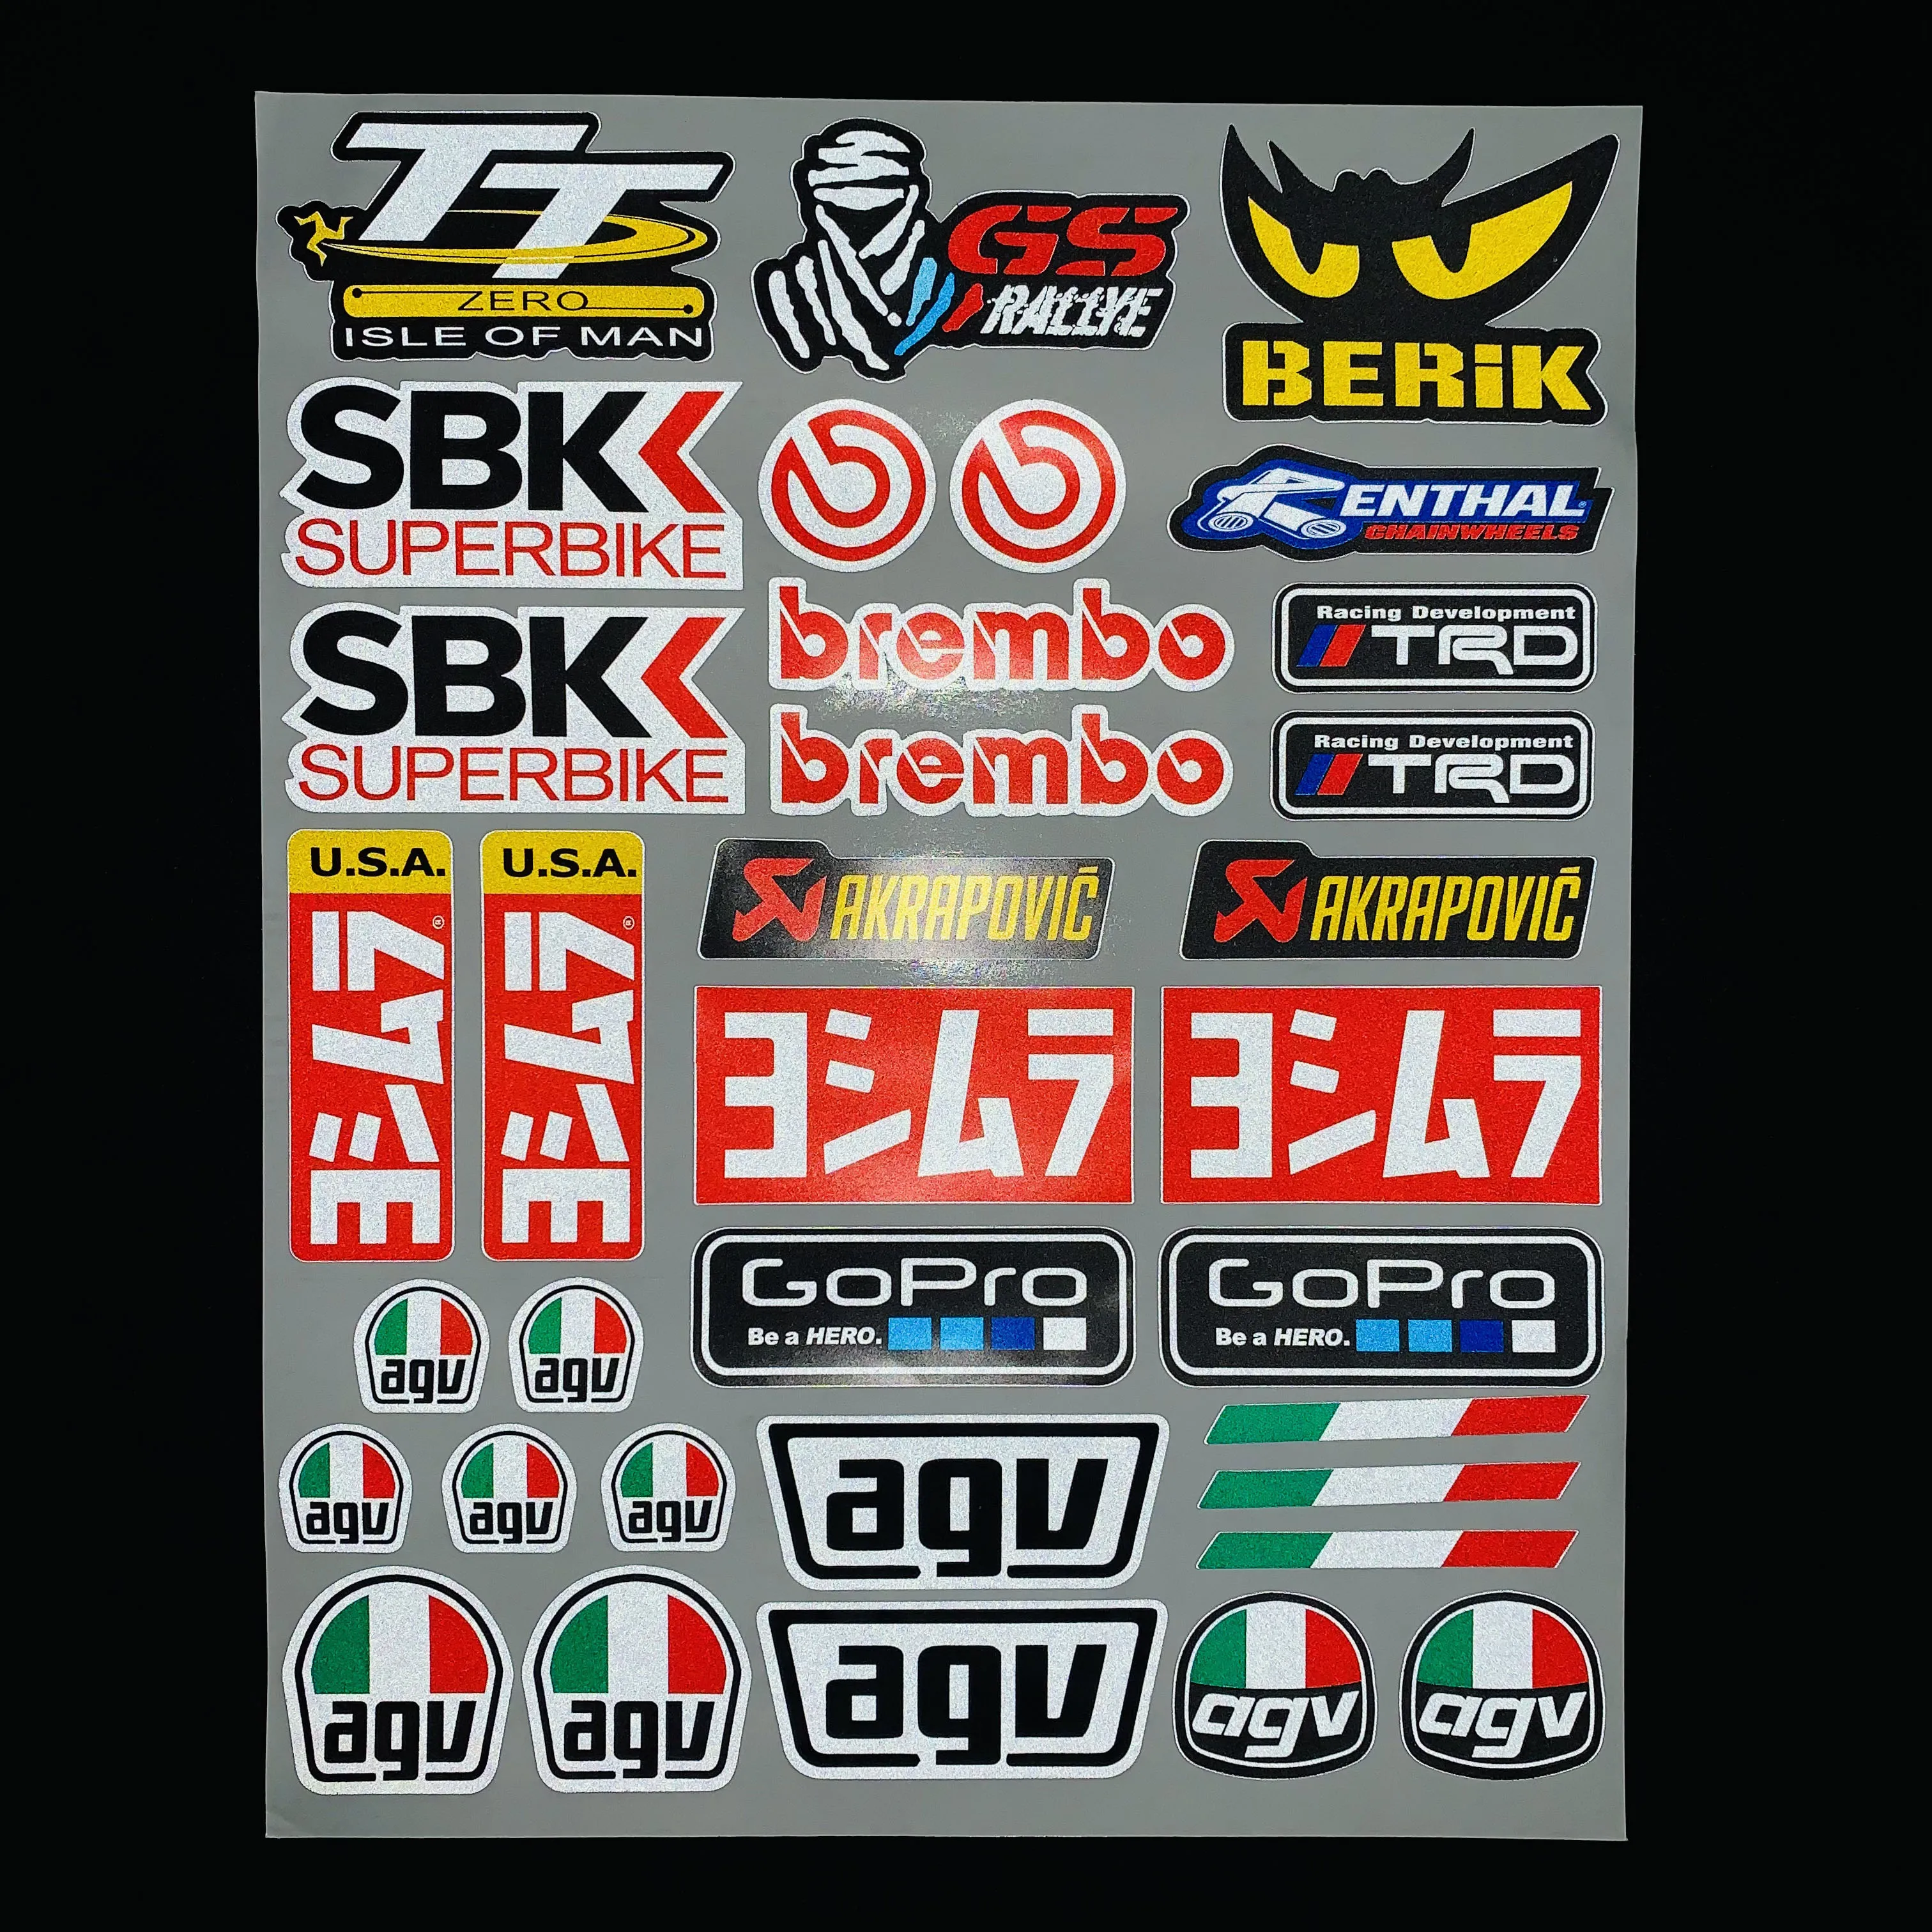 Two Renthal Motocross Supercross Racing Sponsor Decals Stickers Dirtbike Enduro